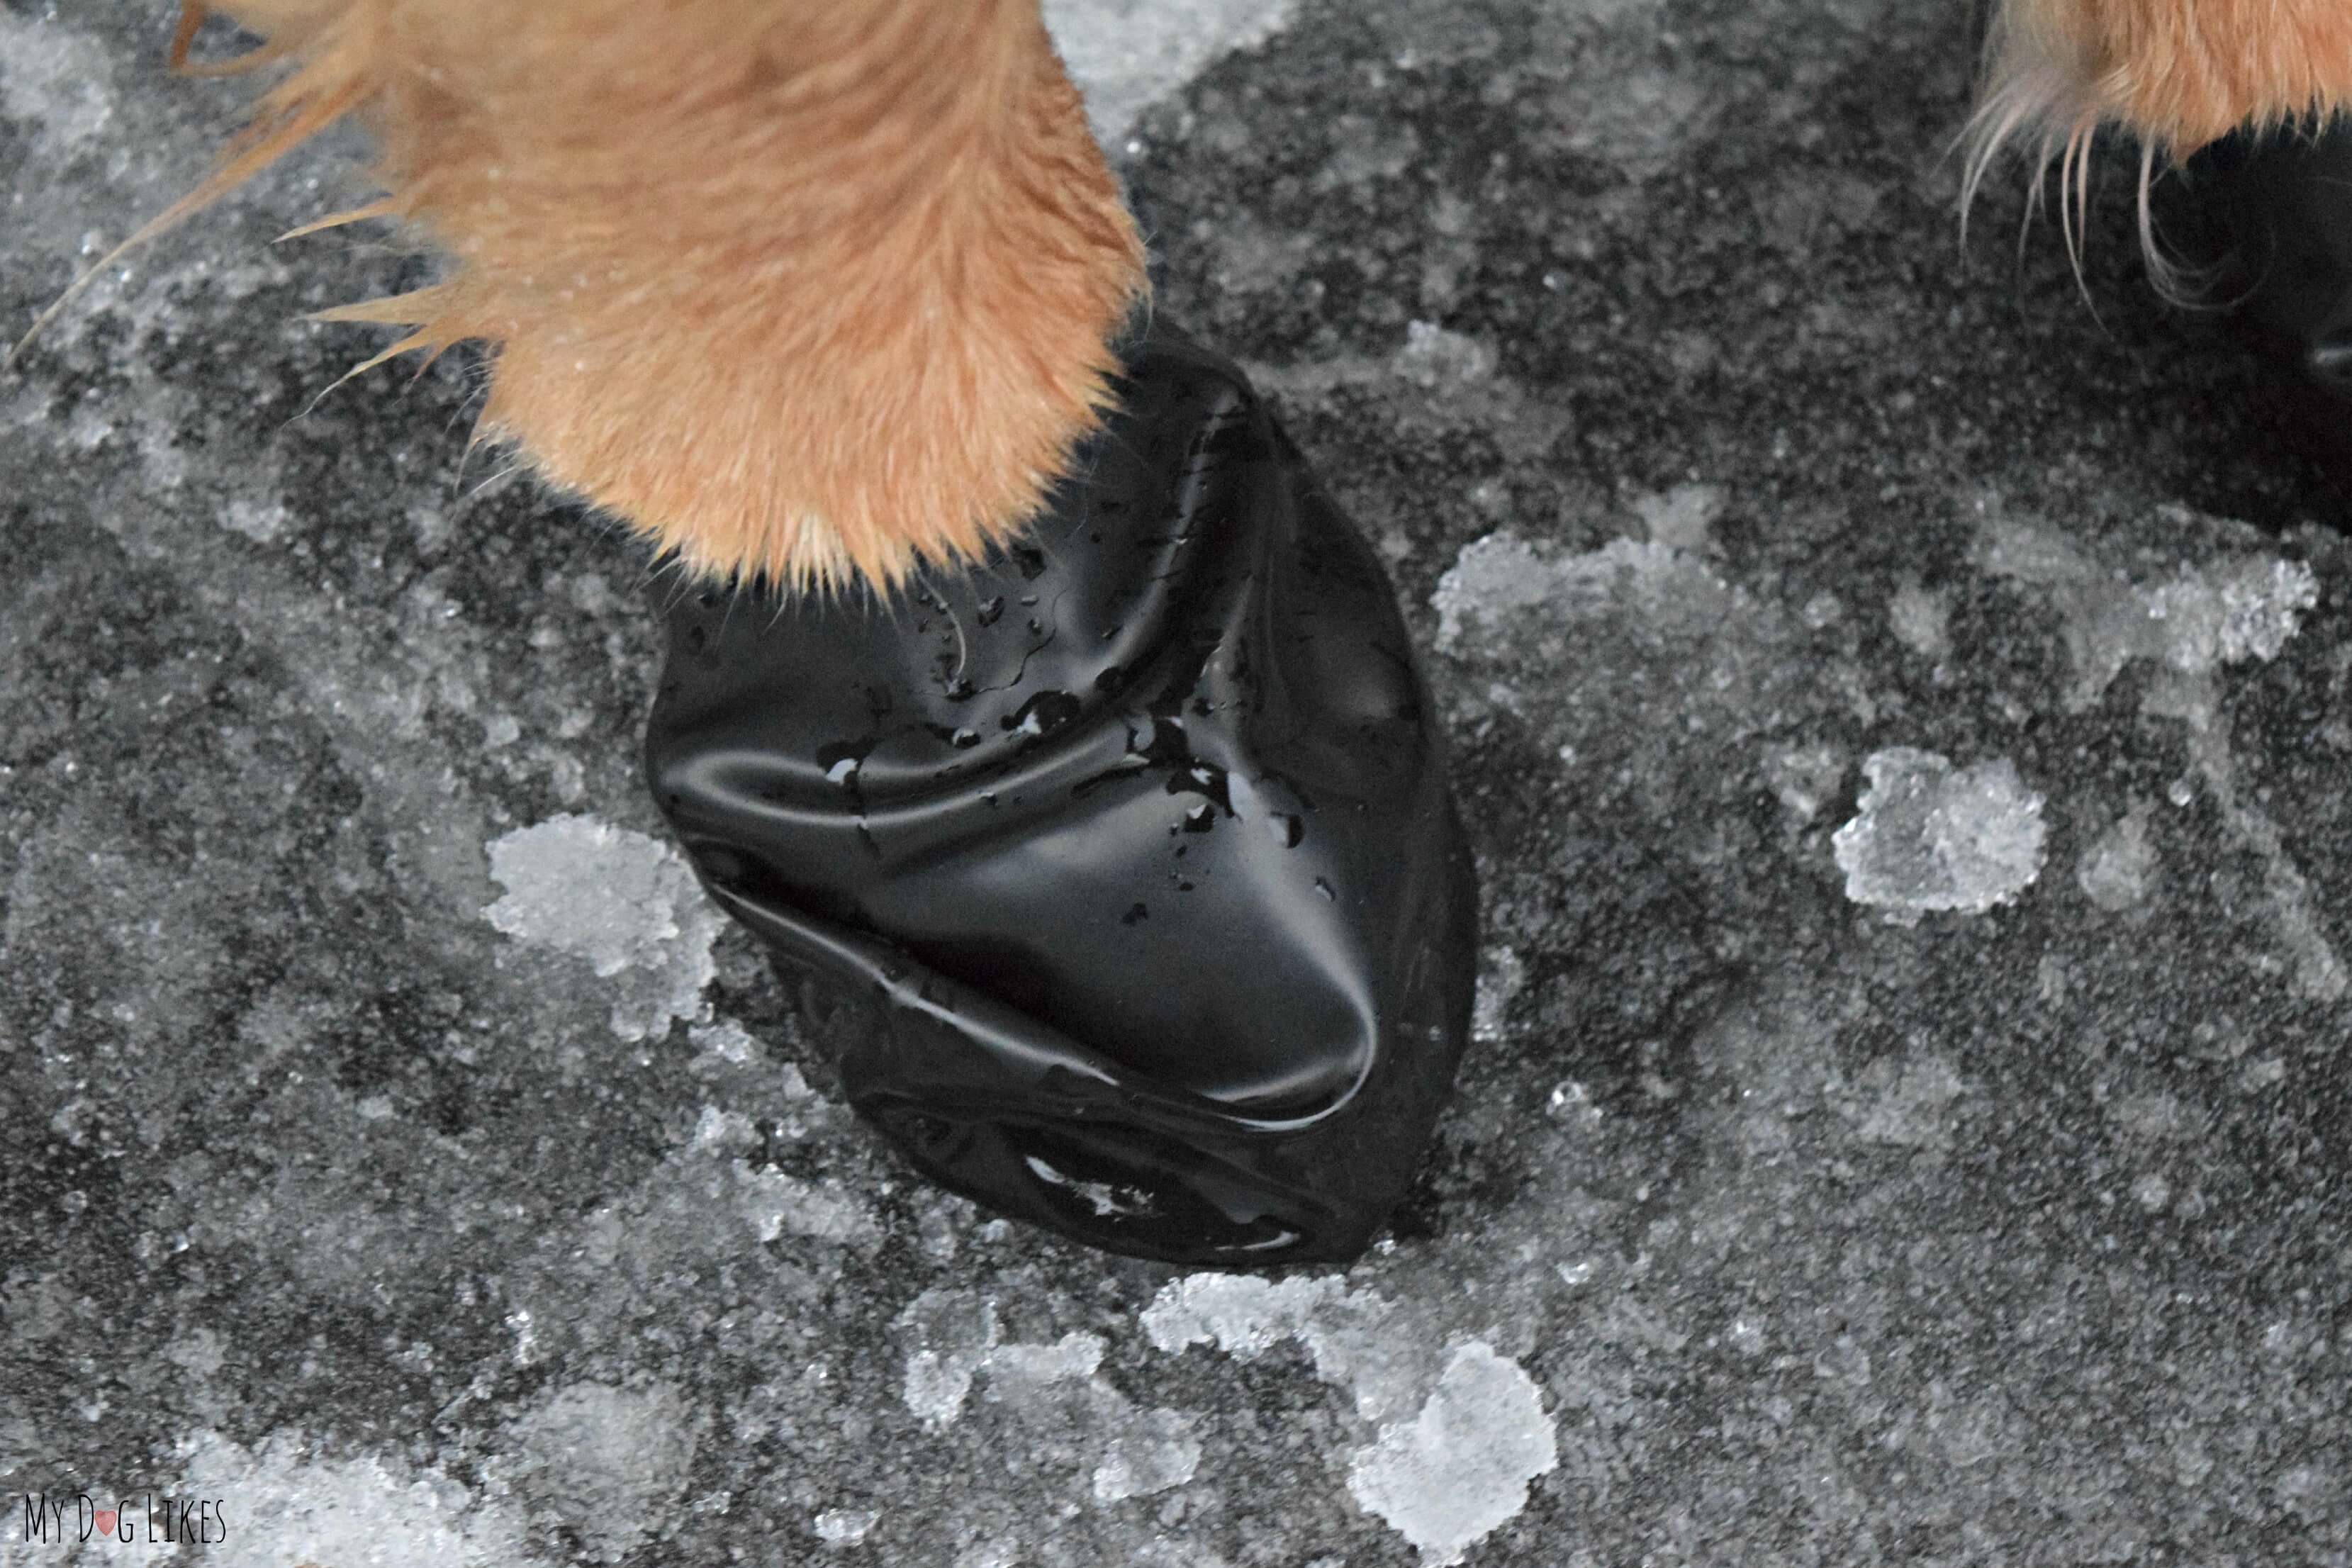 PAWZ Dog Boots - Waterproof Dog Boots 